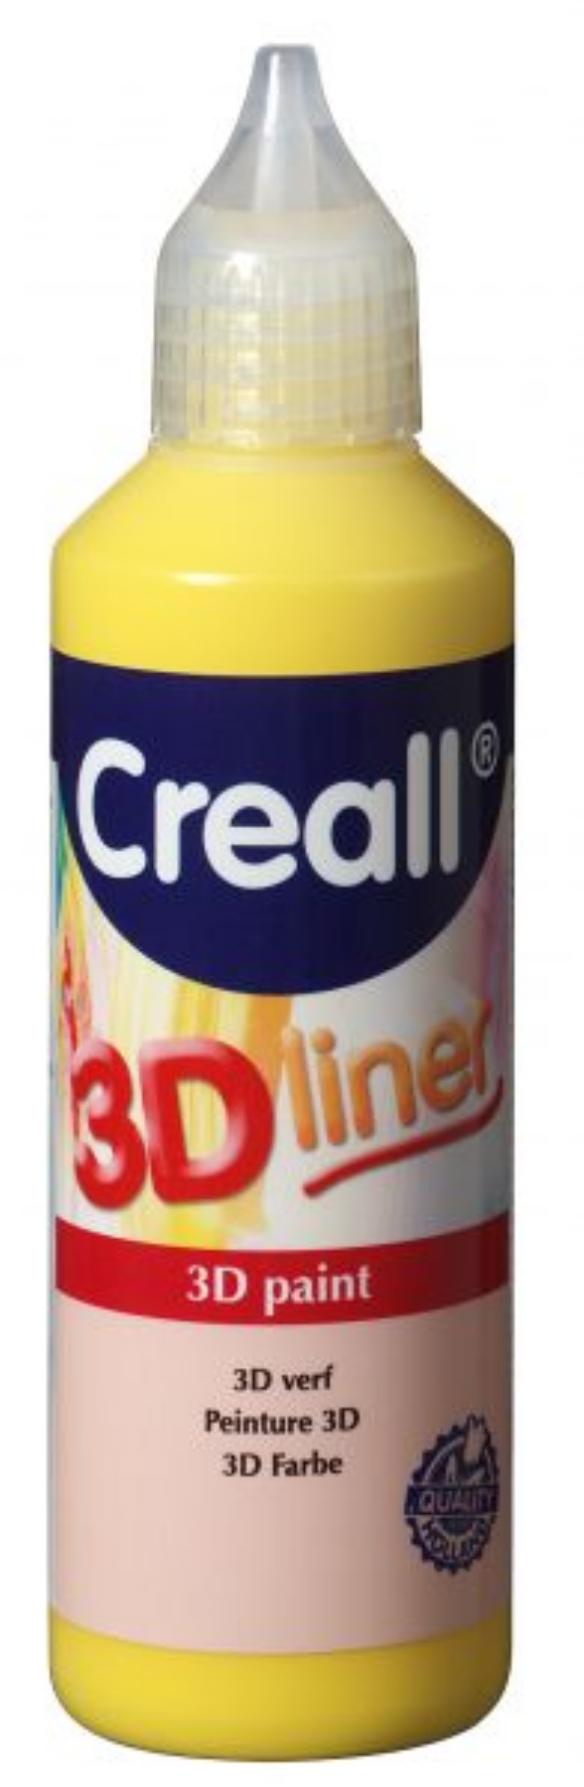 OP=OP Creall 3D liner/puffy paint/puff verf, geel kopen?